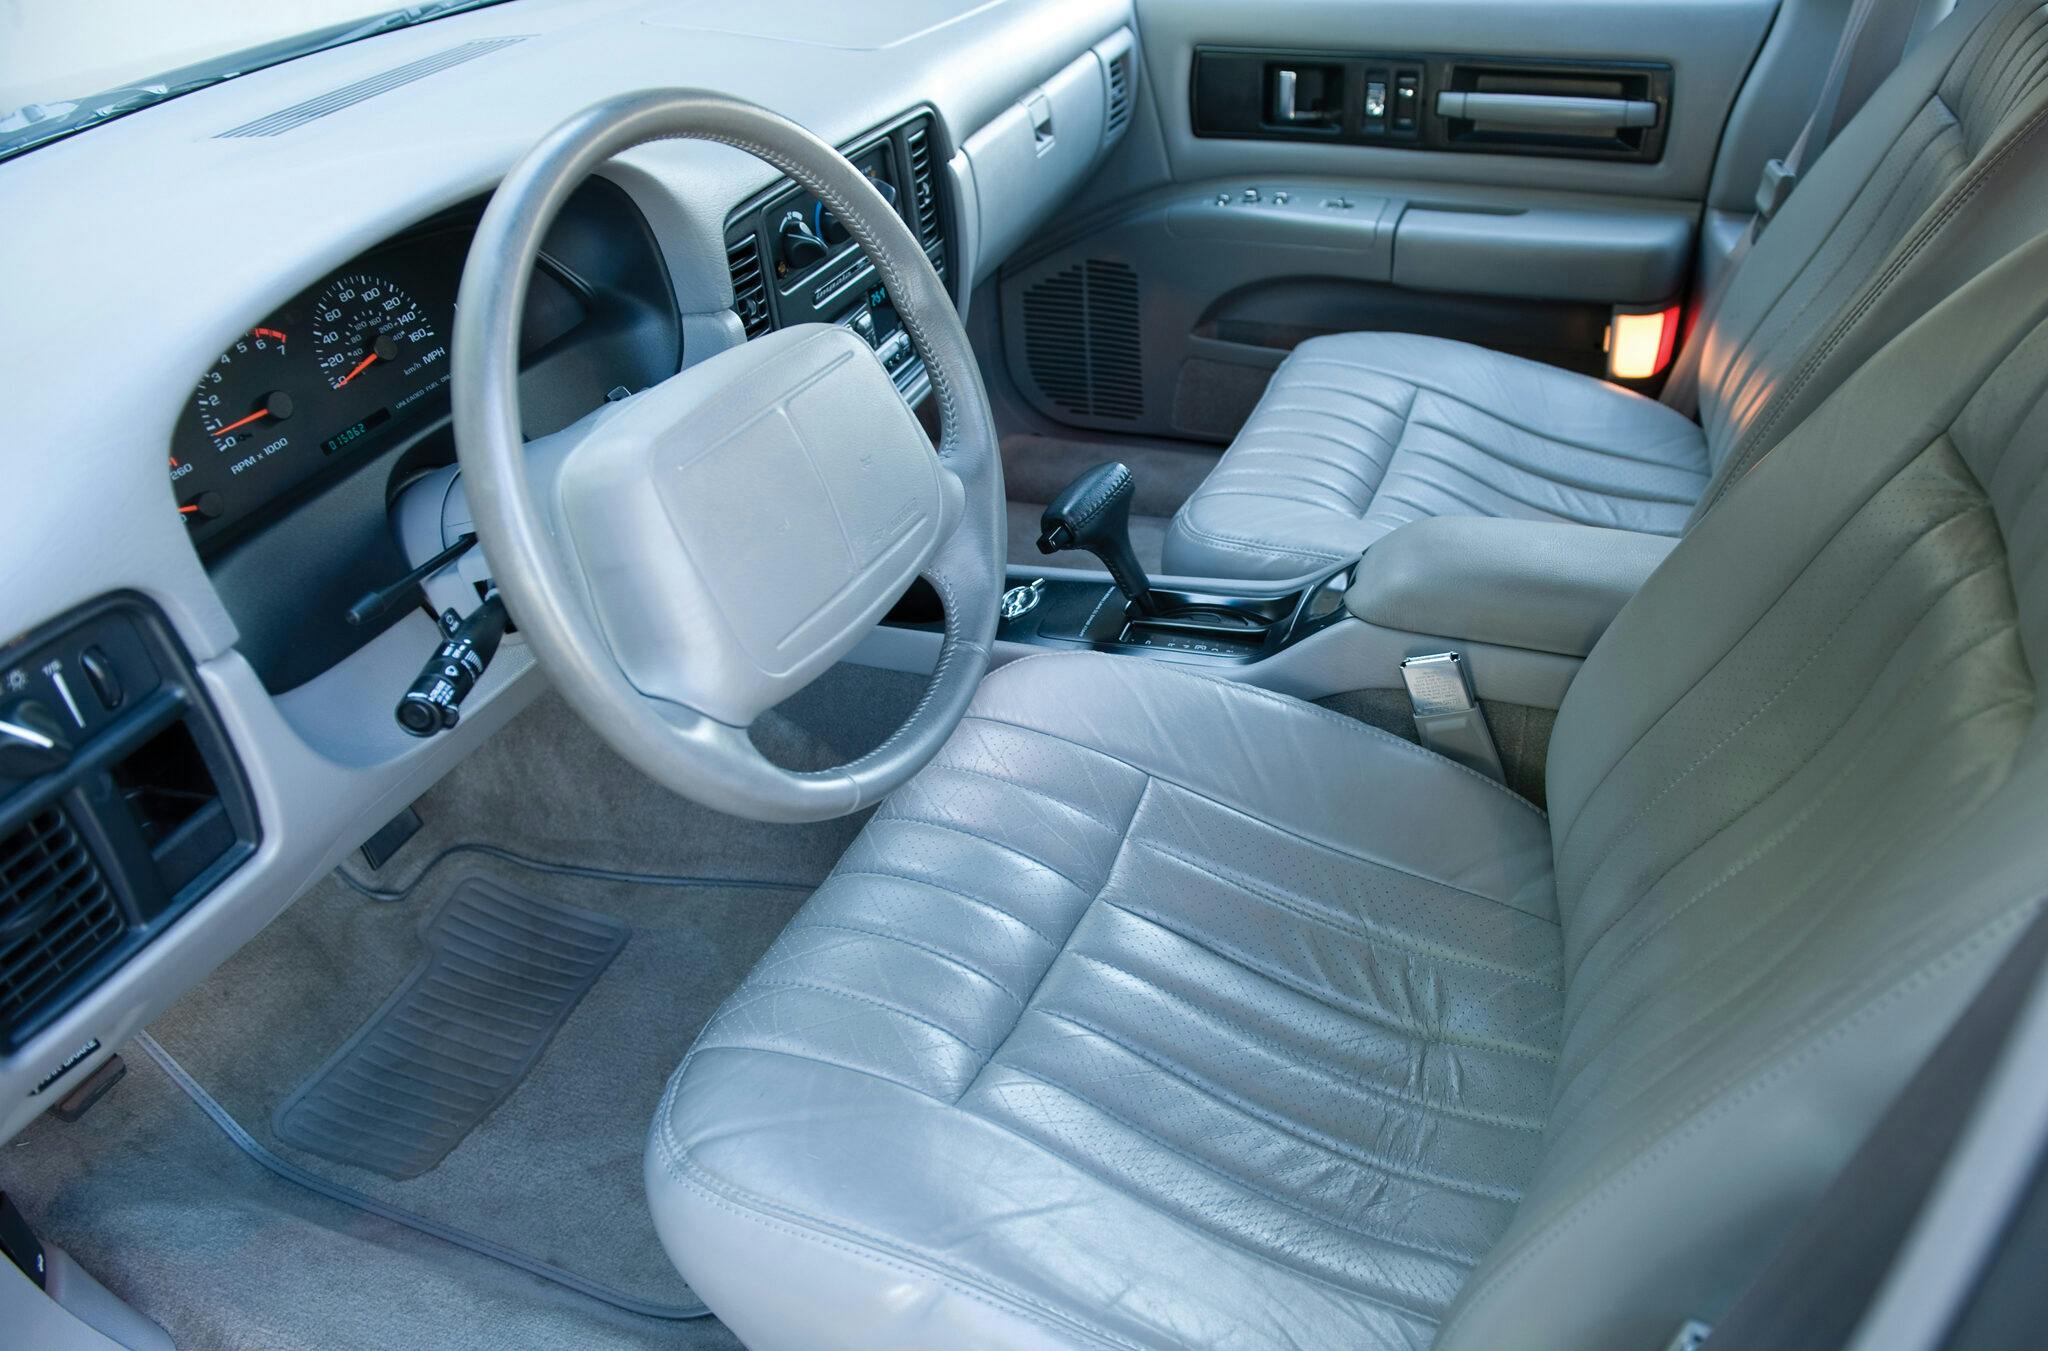 Chevrolet Impala SS interior